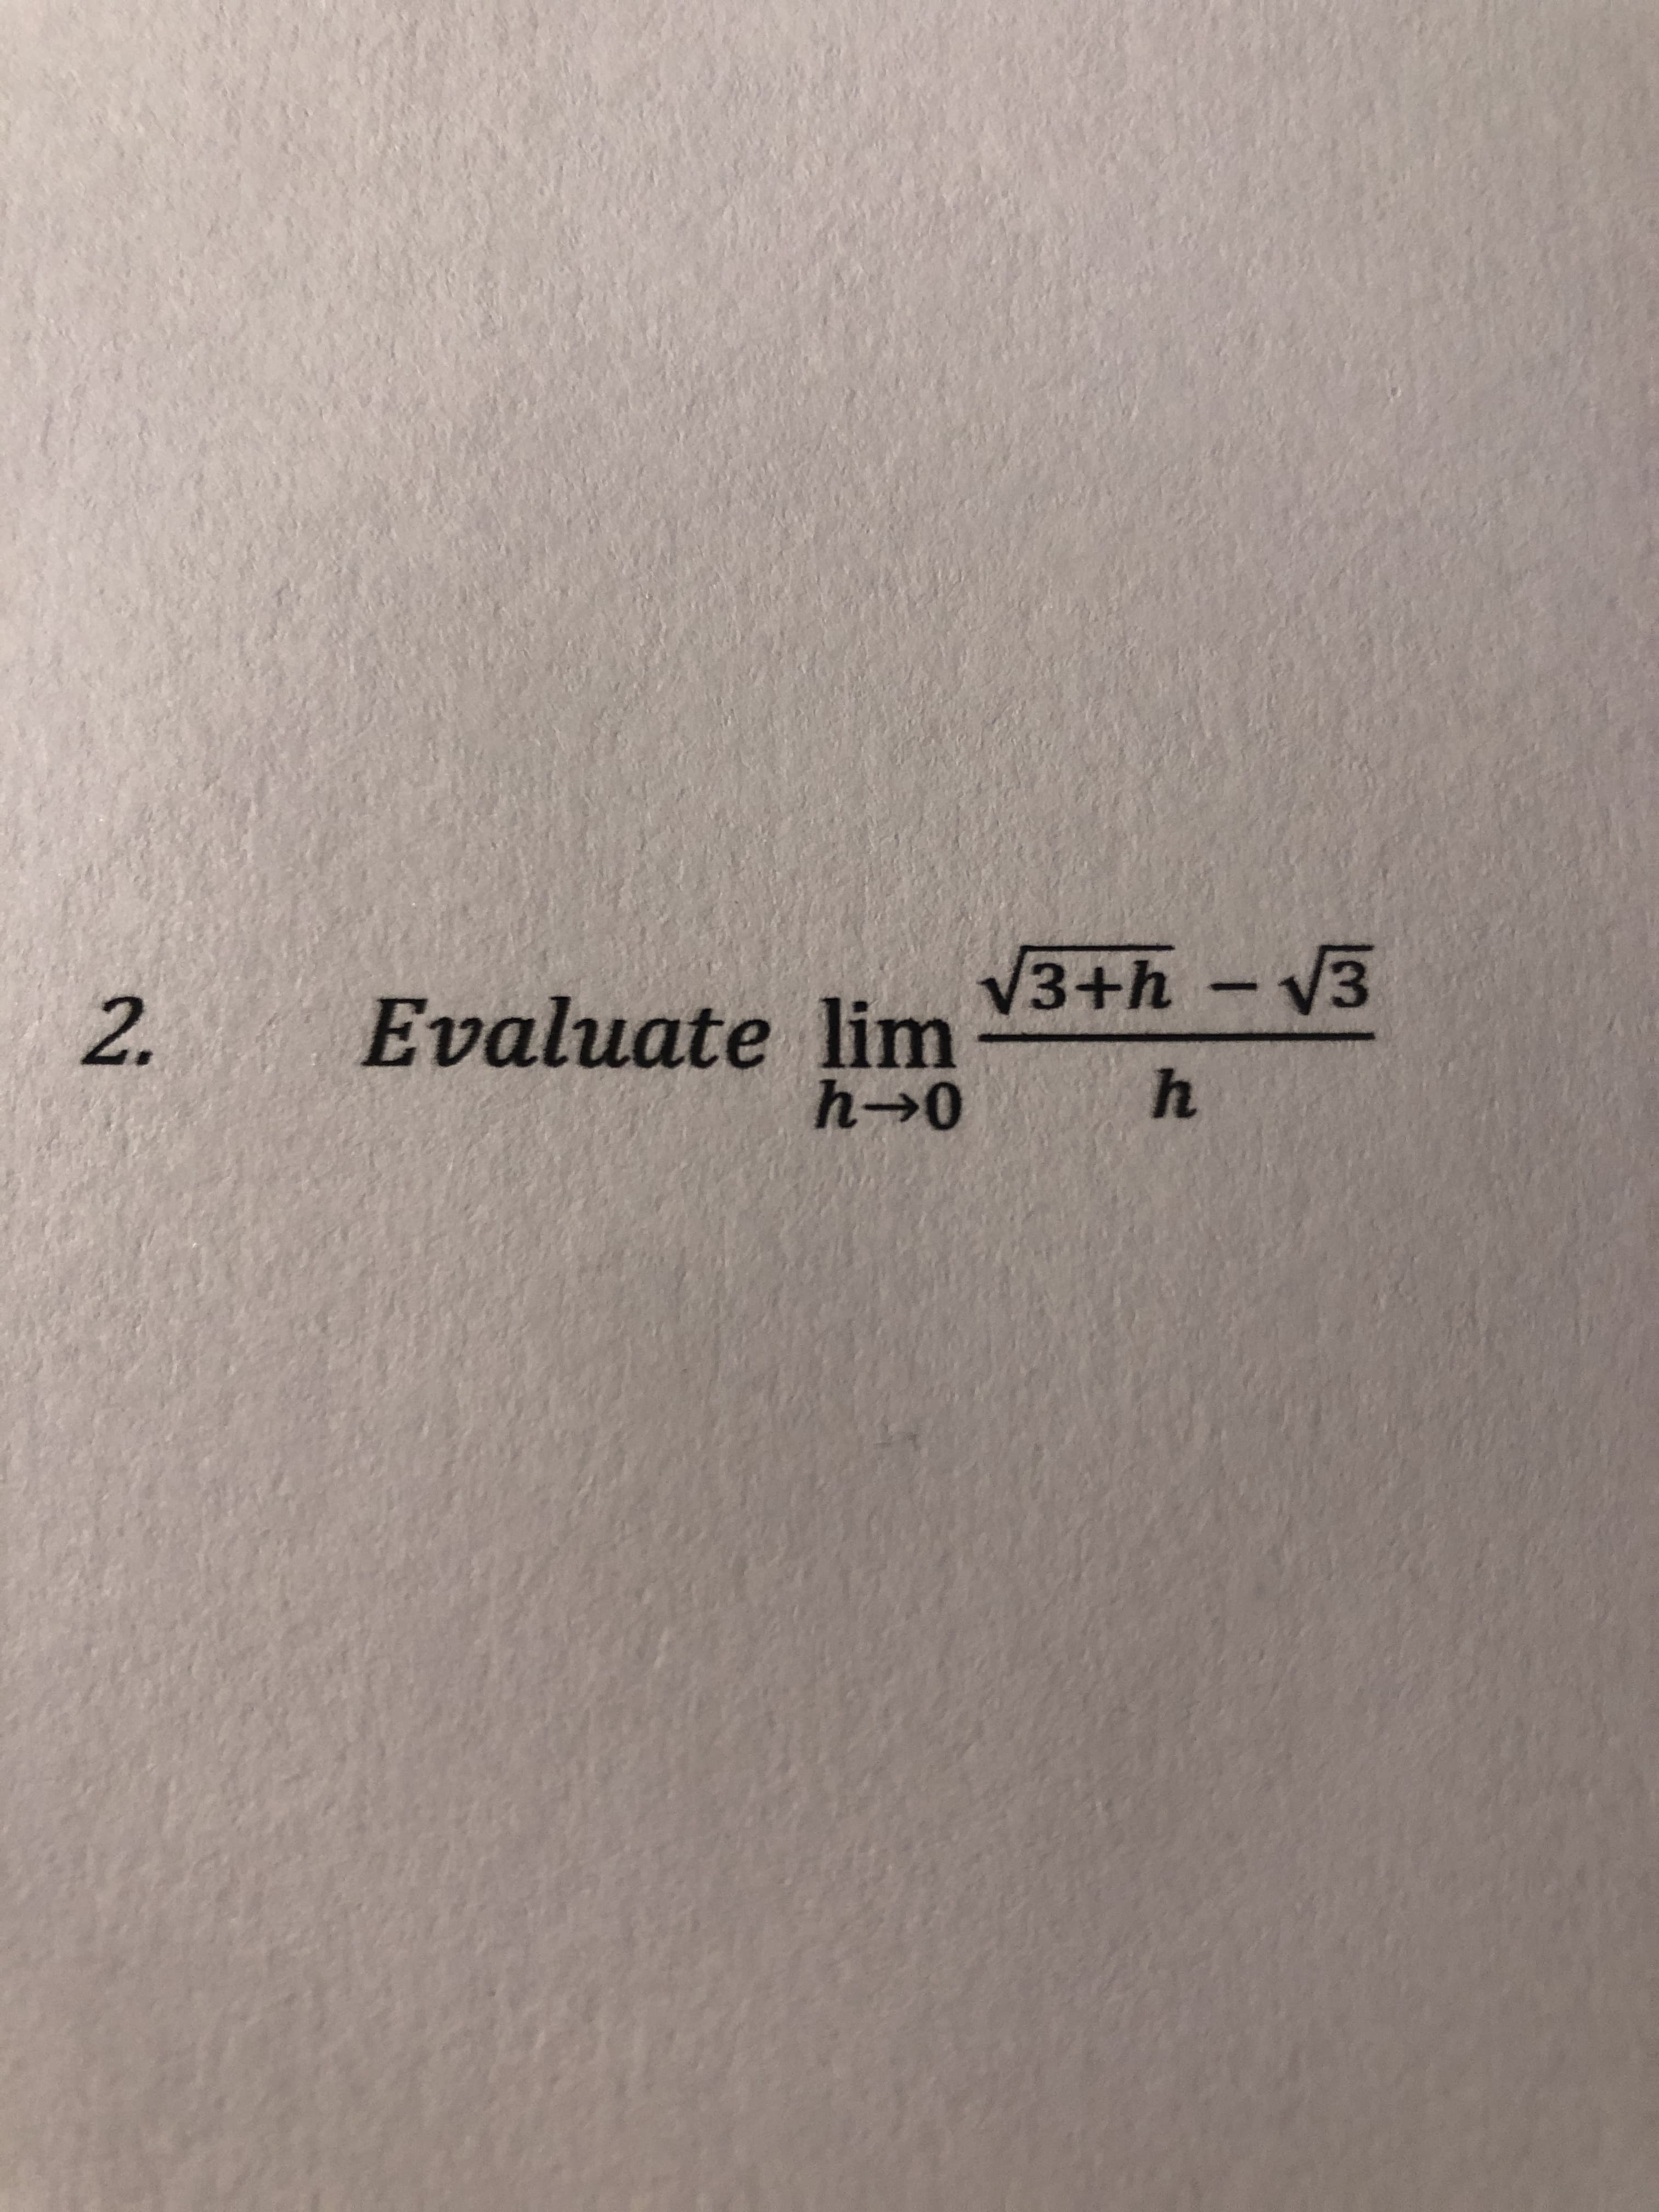 V3+h -V3
Evaluate lim
h→0
2.
